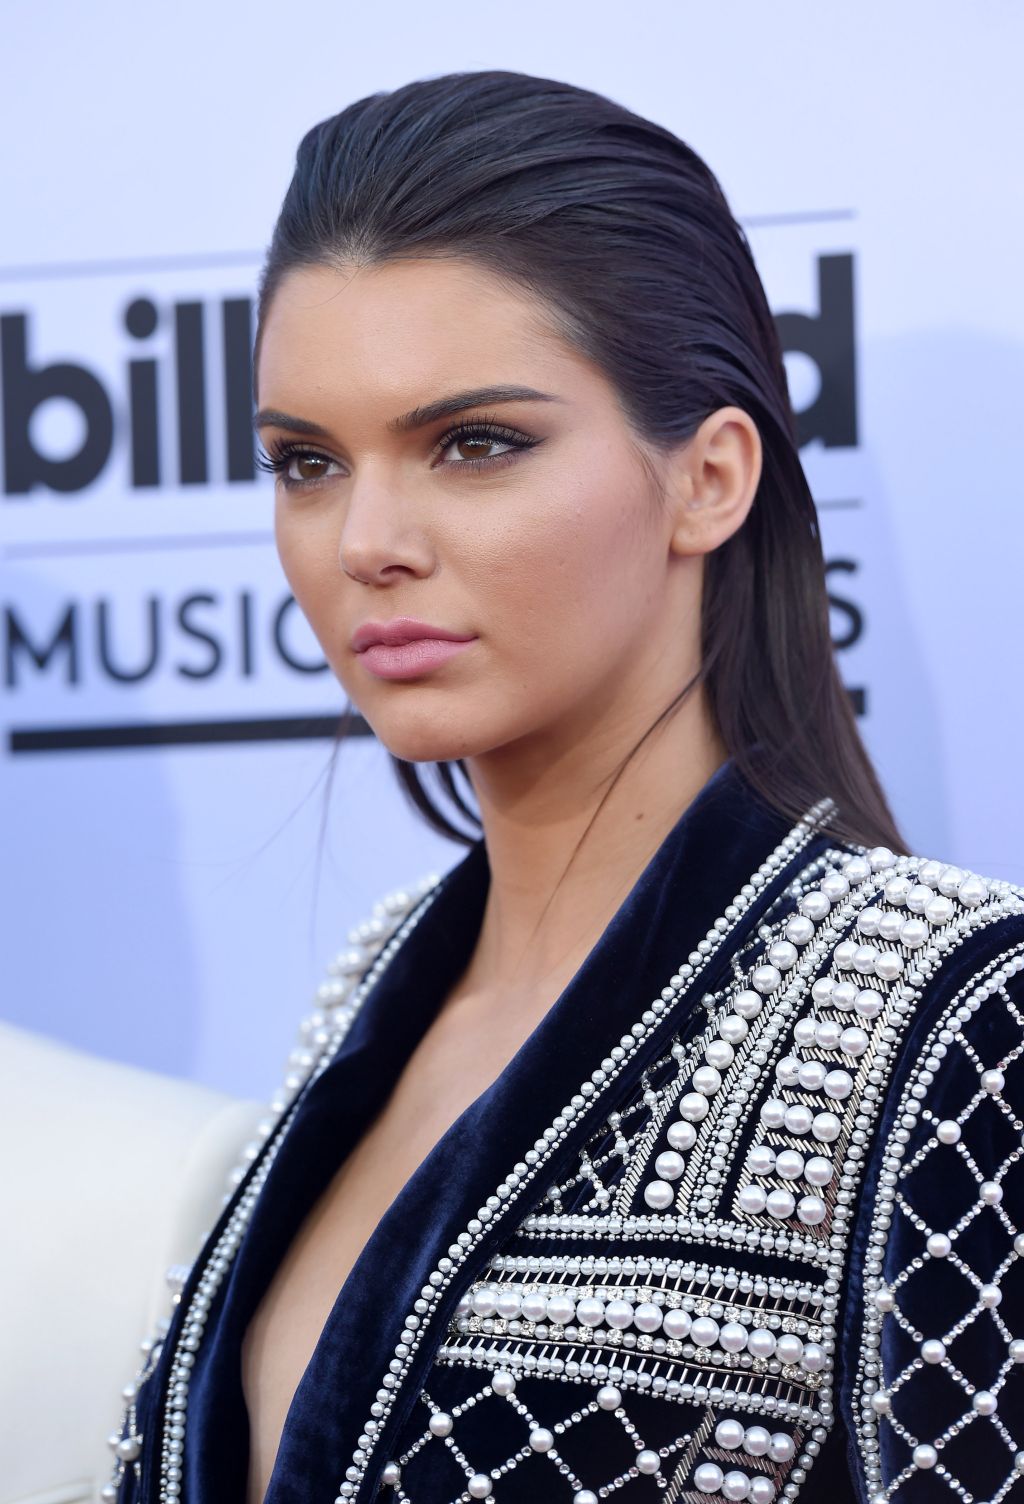 Kendall Jenner at 2015 Billboard Awards